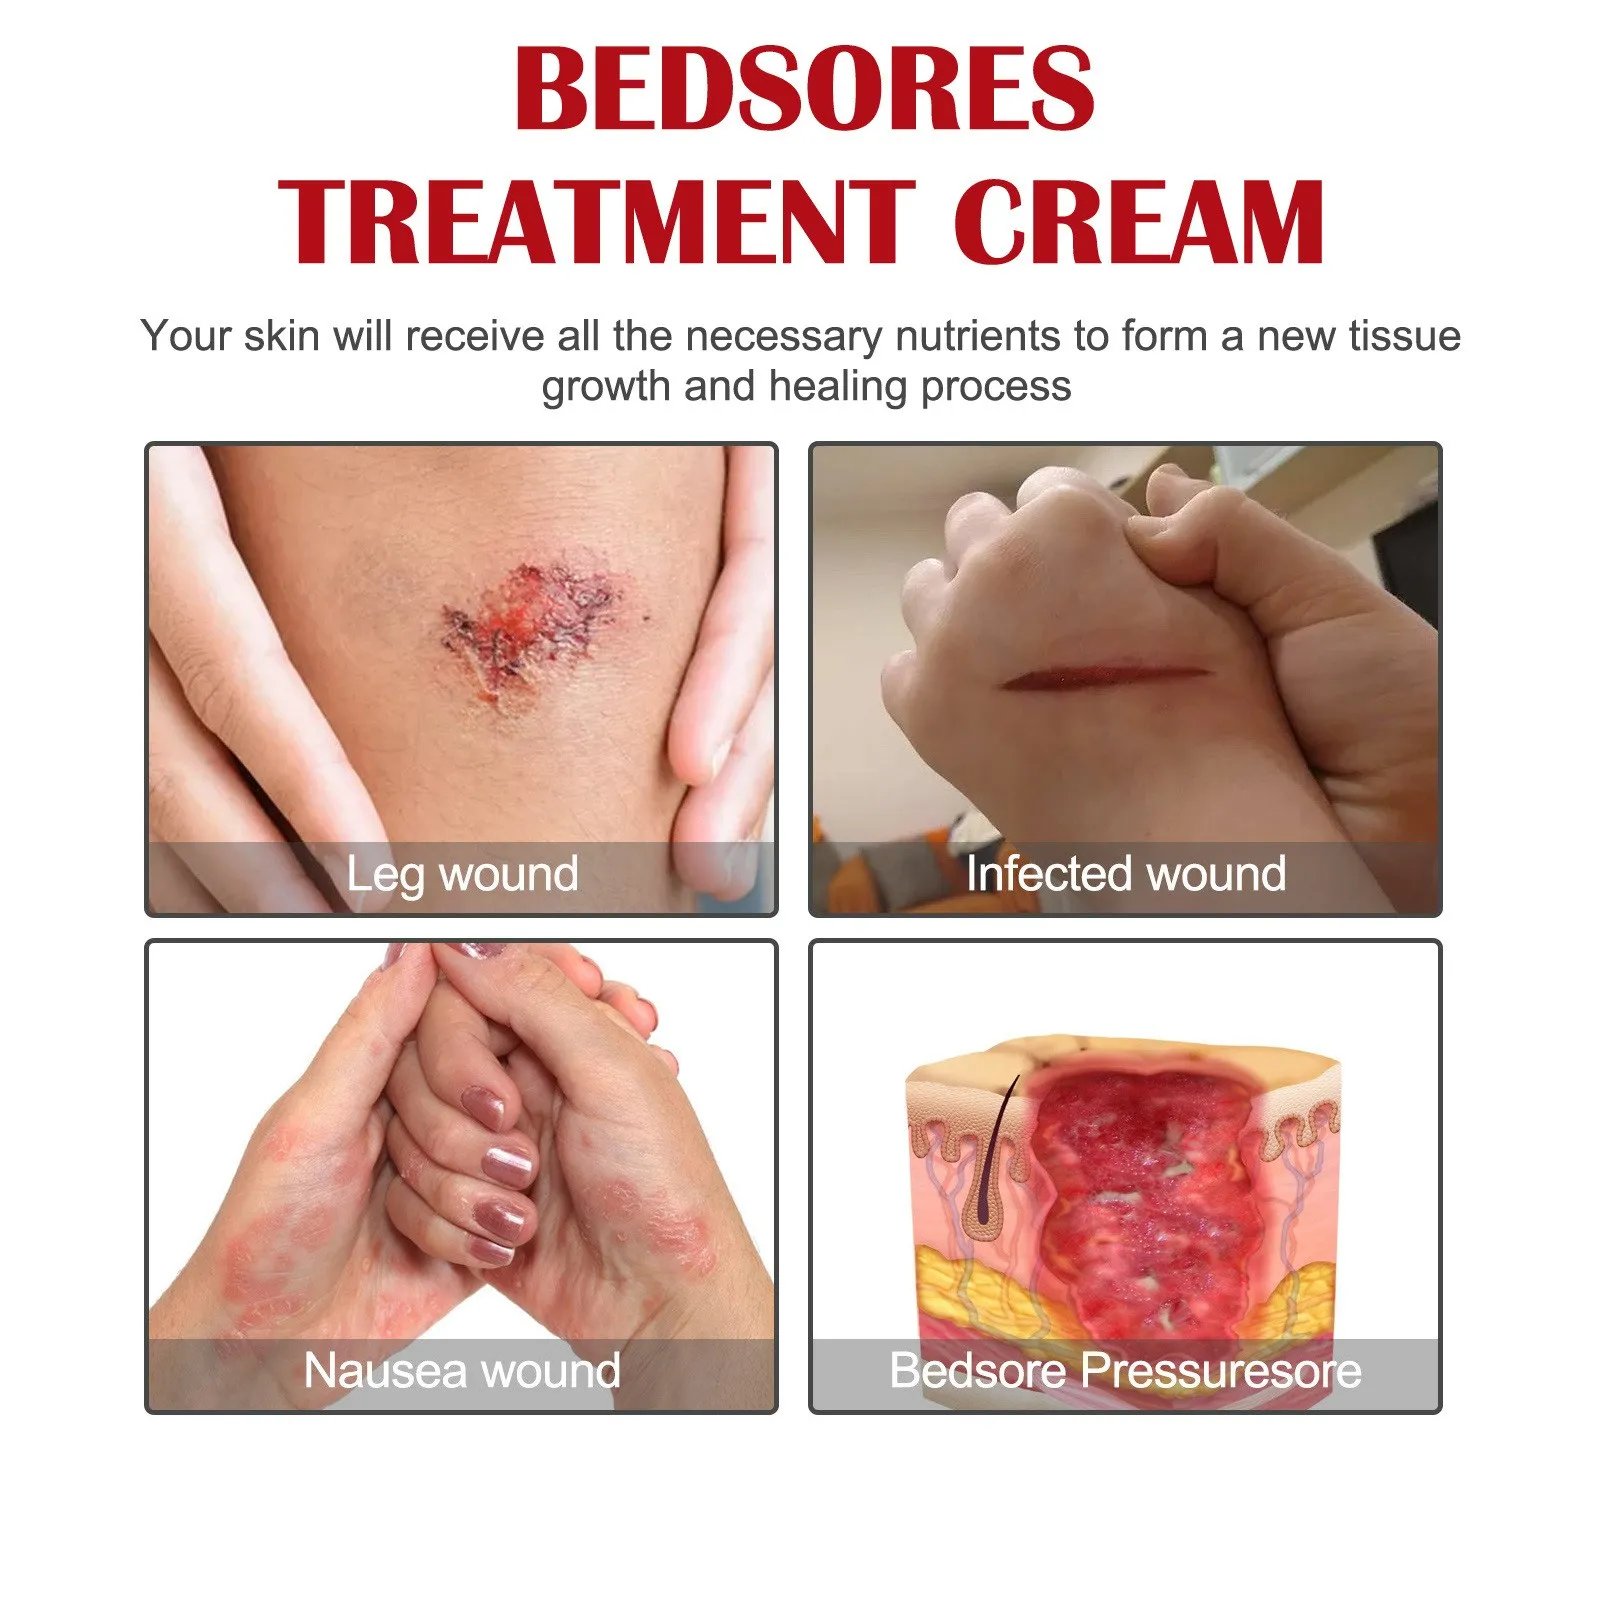 https://ae01.alicdn.com/kf/Secea544b762c4983966a4233b29c8818b/Bedsores-Wound-Healing-Cream-Inhibit-Fungal-Pressure-Sores-Treatment-Pain-Festering-Necrotic-Dressing-Repair-Ulcer-Ointment.jpg